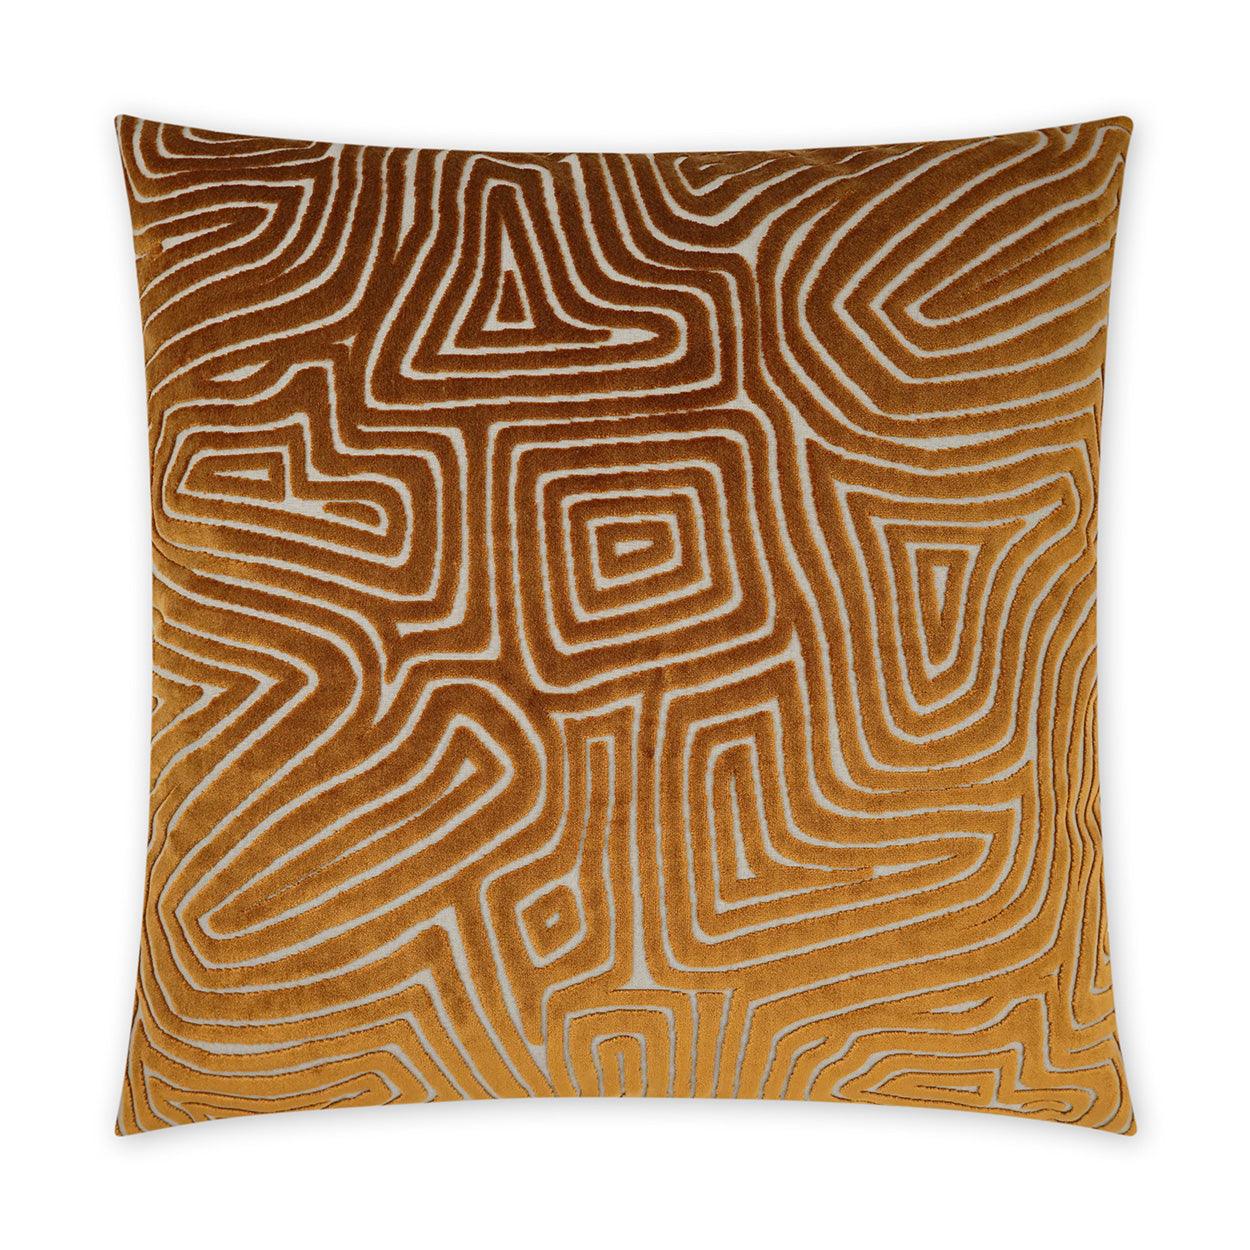 Vertigo Rust Abstract Copper Large Throw Pillow With Insert Throw Pillows LOOMLAN By D.V. Kap